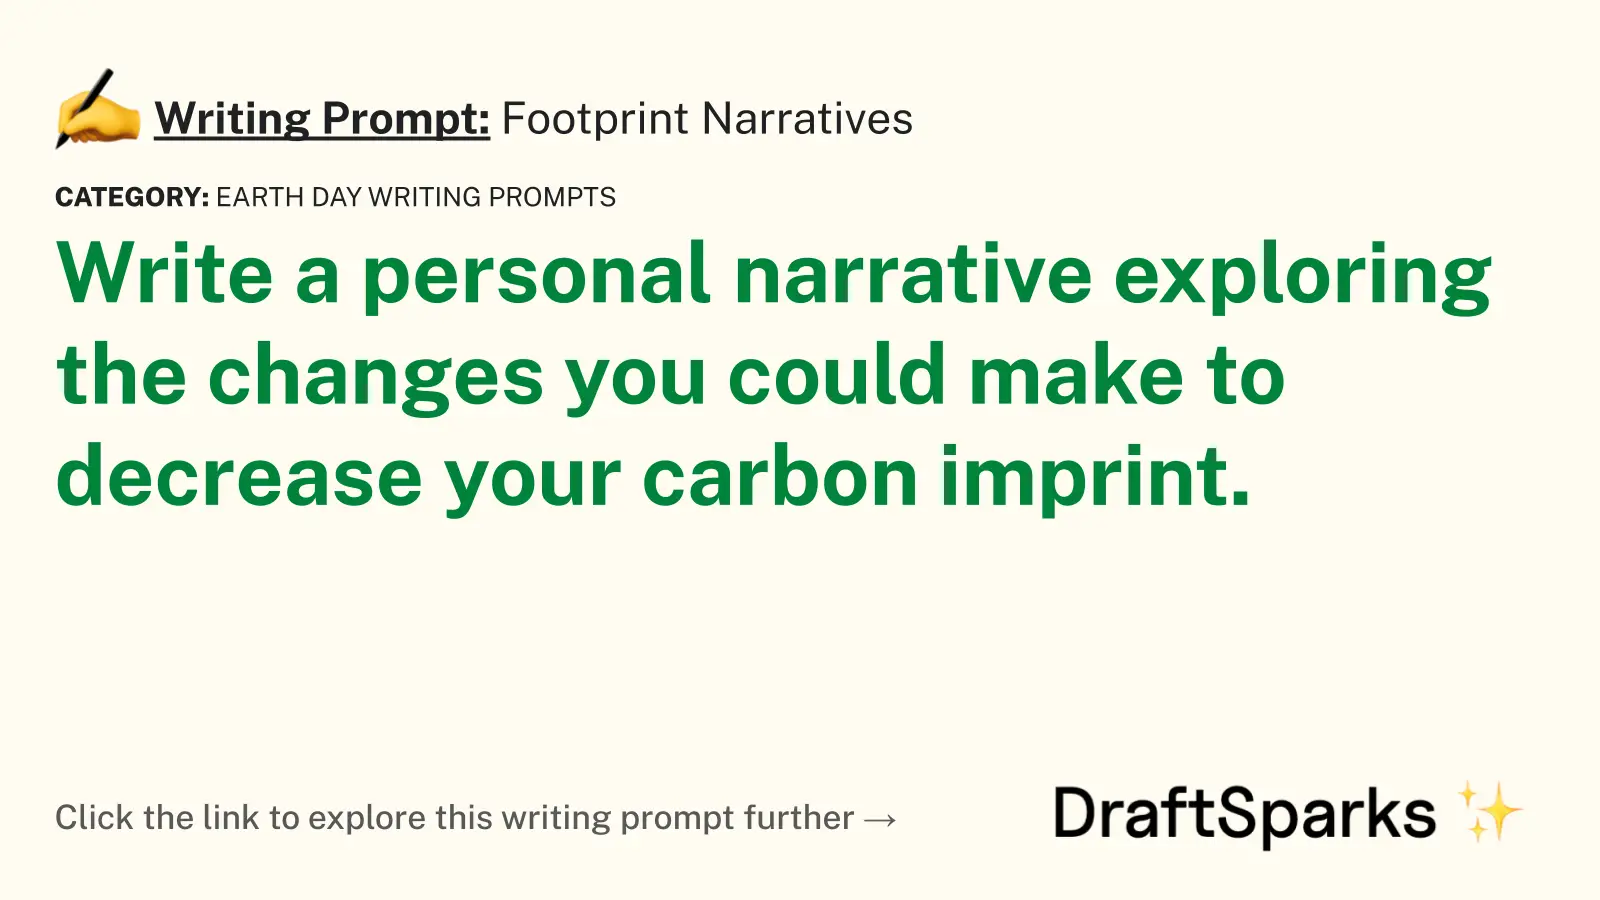 Footprint Narratives